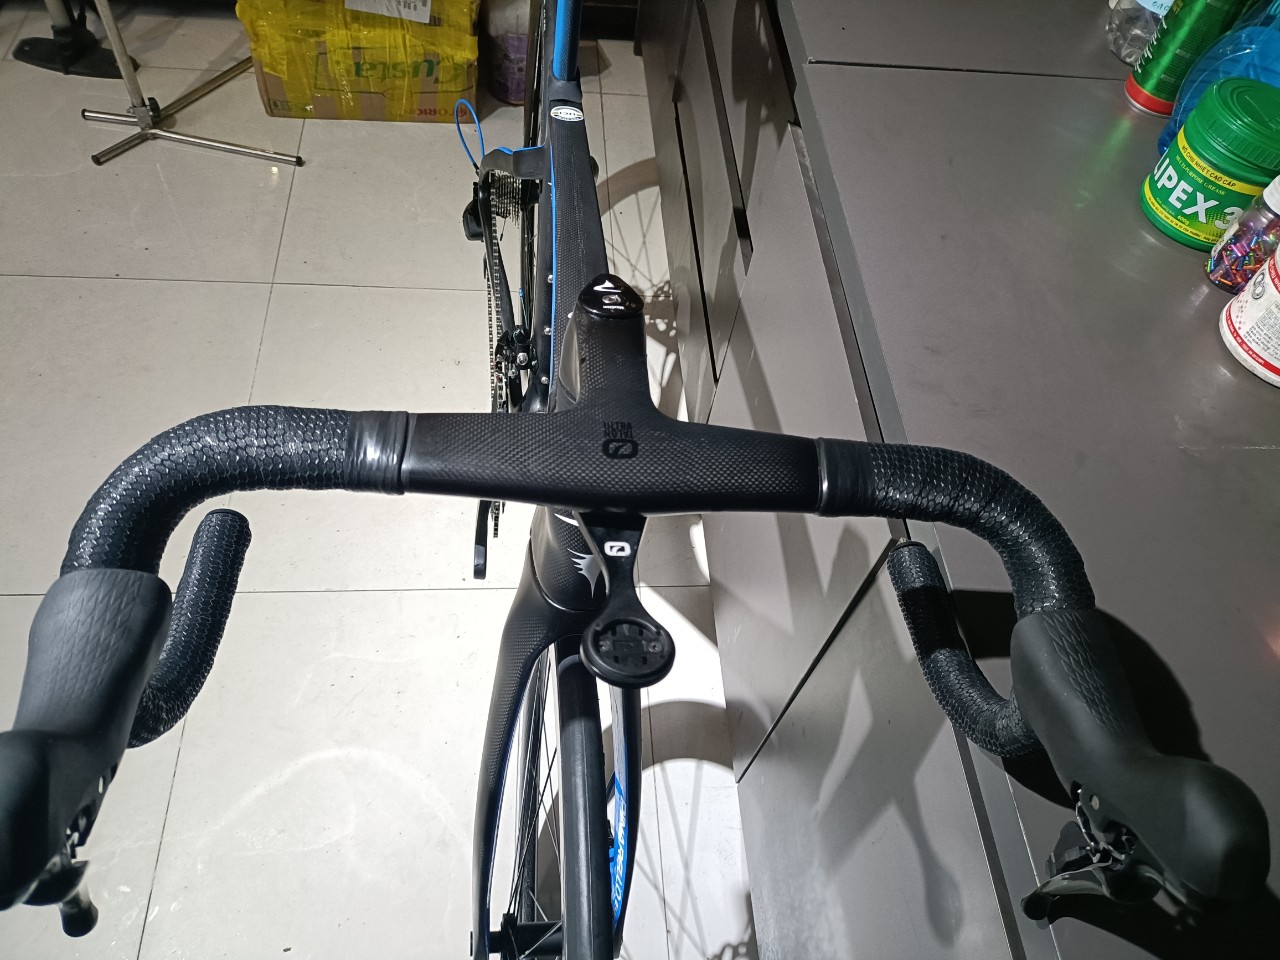 Xe đạp Pinarello F12 105 R7020 Full carbon Đen xanh dương